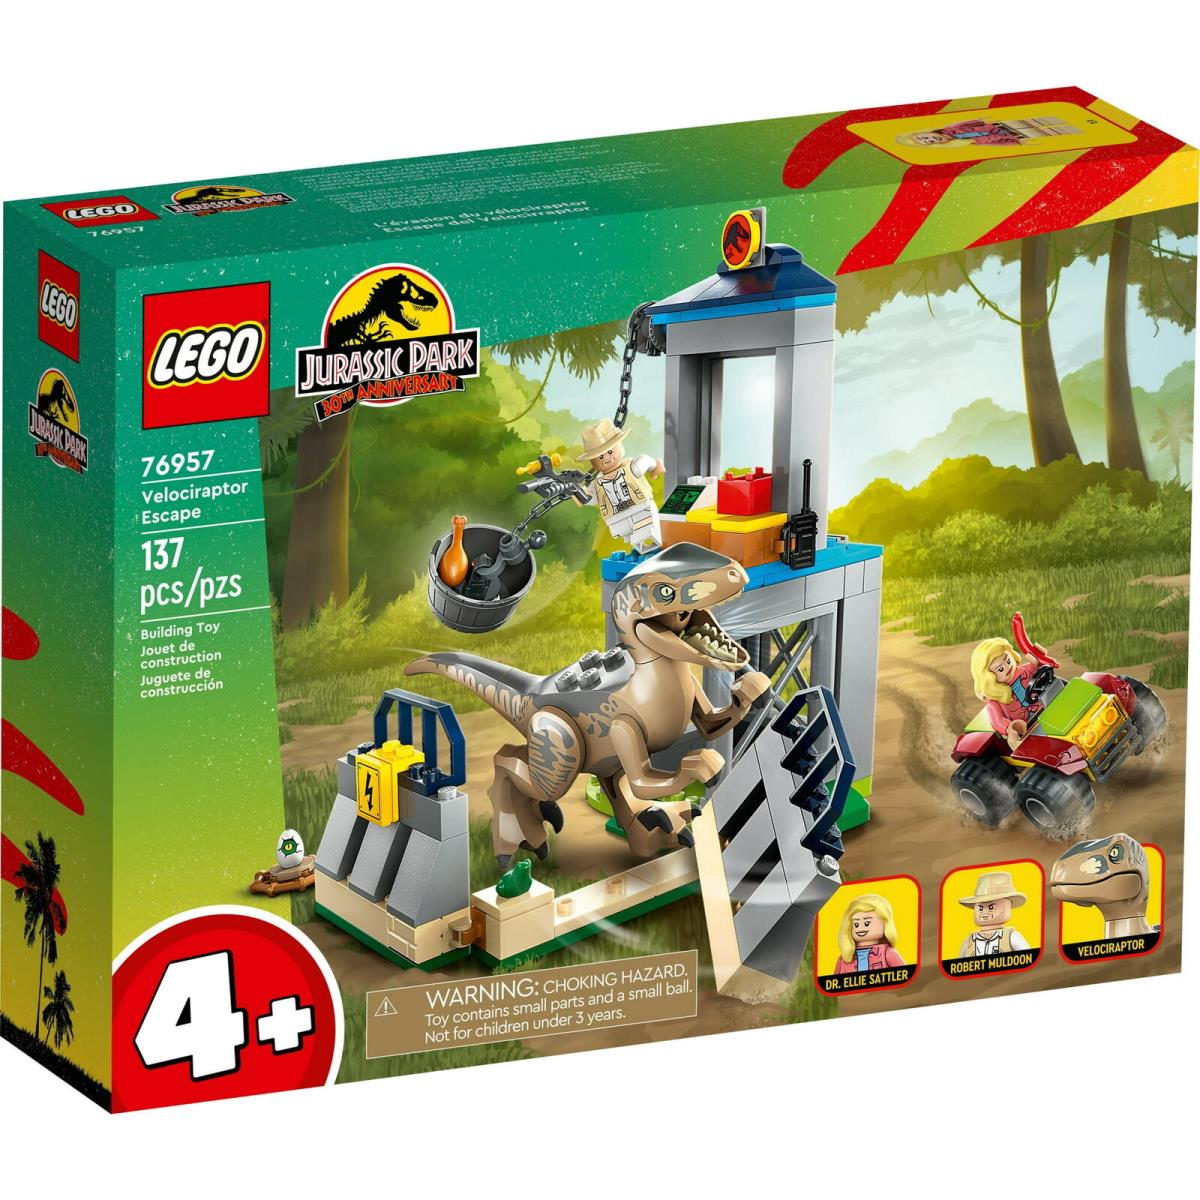 Lego Jurassic Park Velociraptor Escape 76957 Building Toy Set Gift